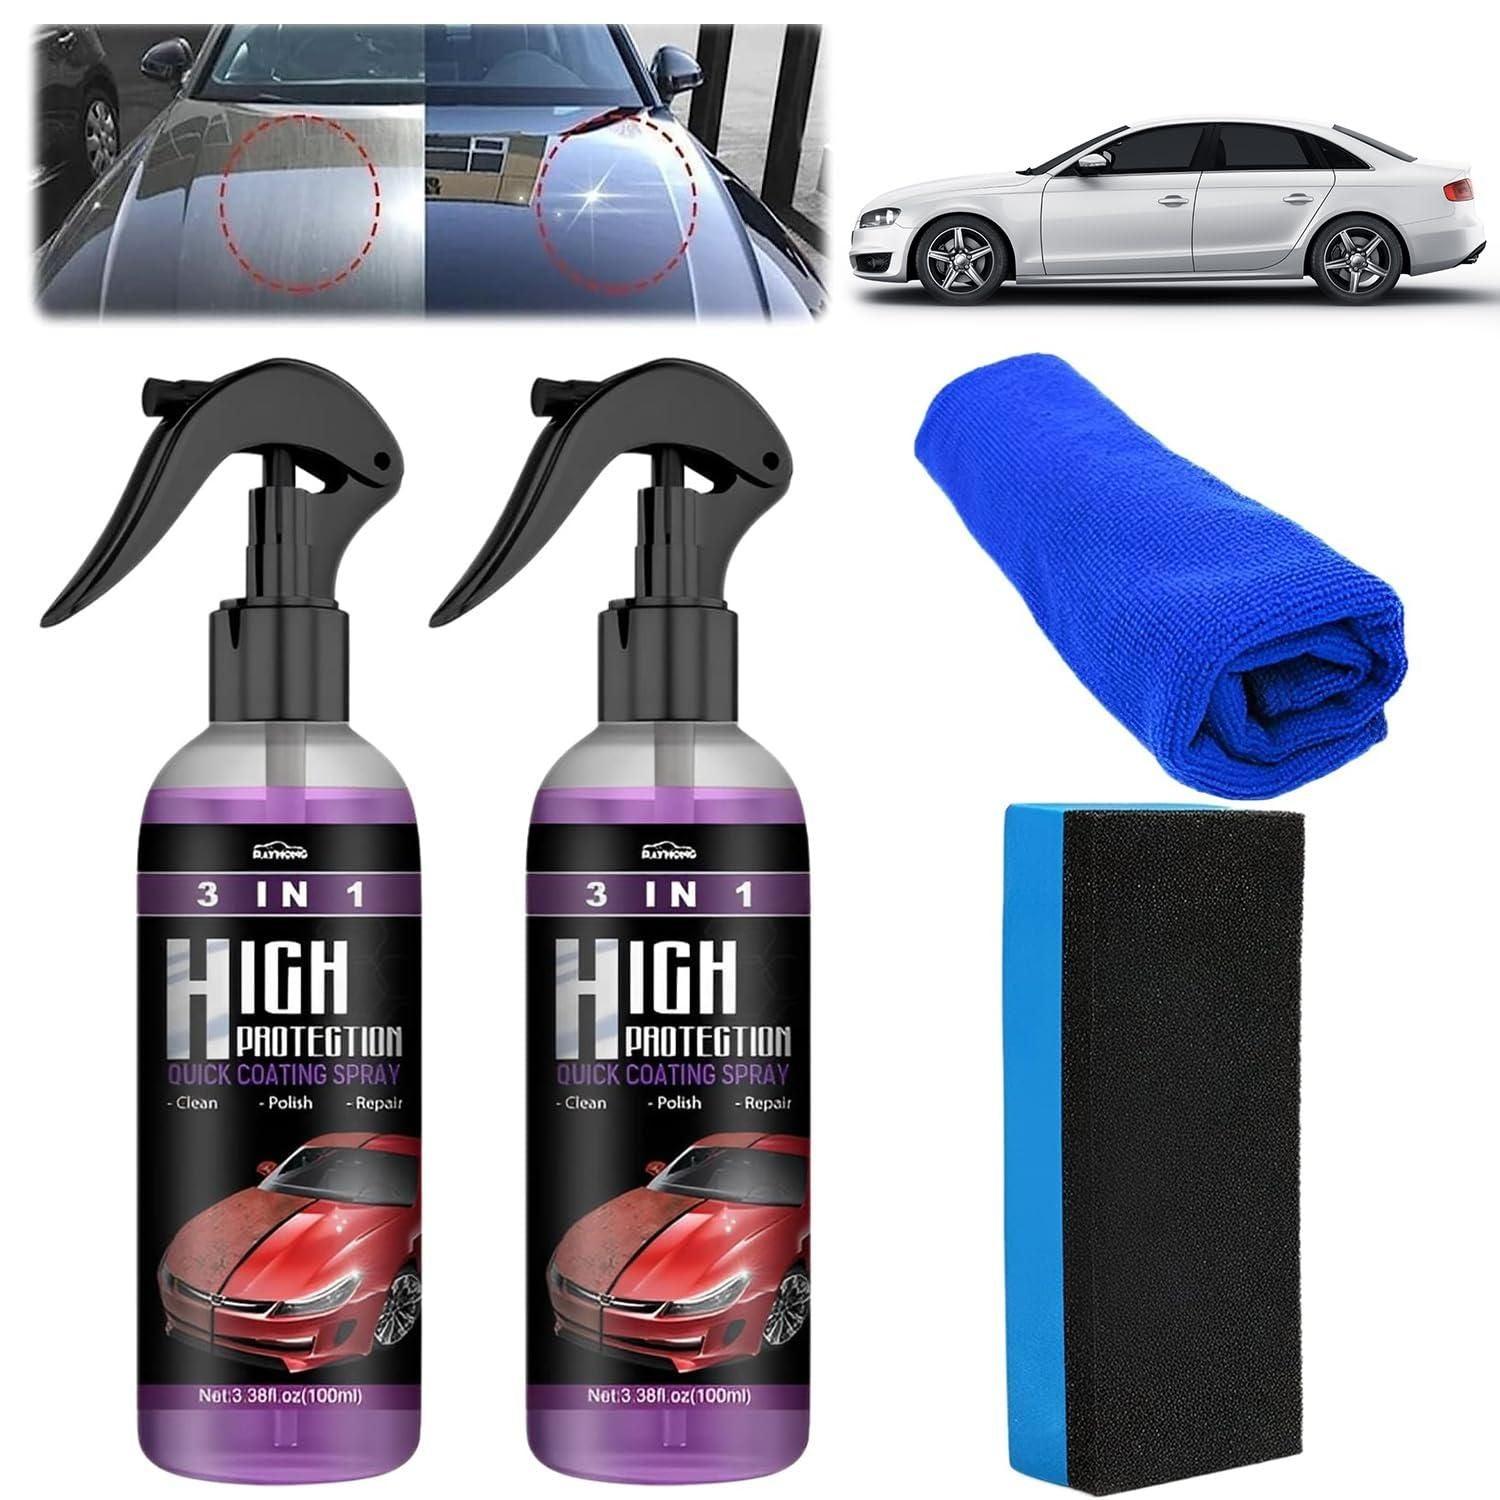 3-in-1 High Protection Quick Car Coating Spray, Autolackreparatur